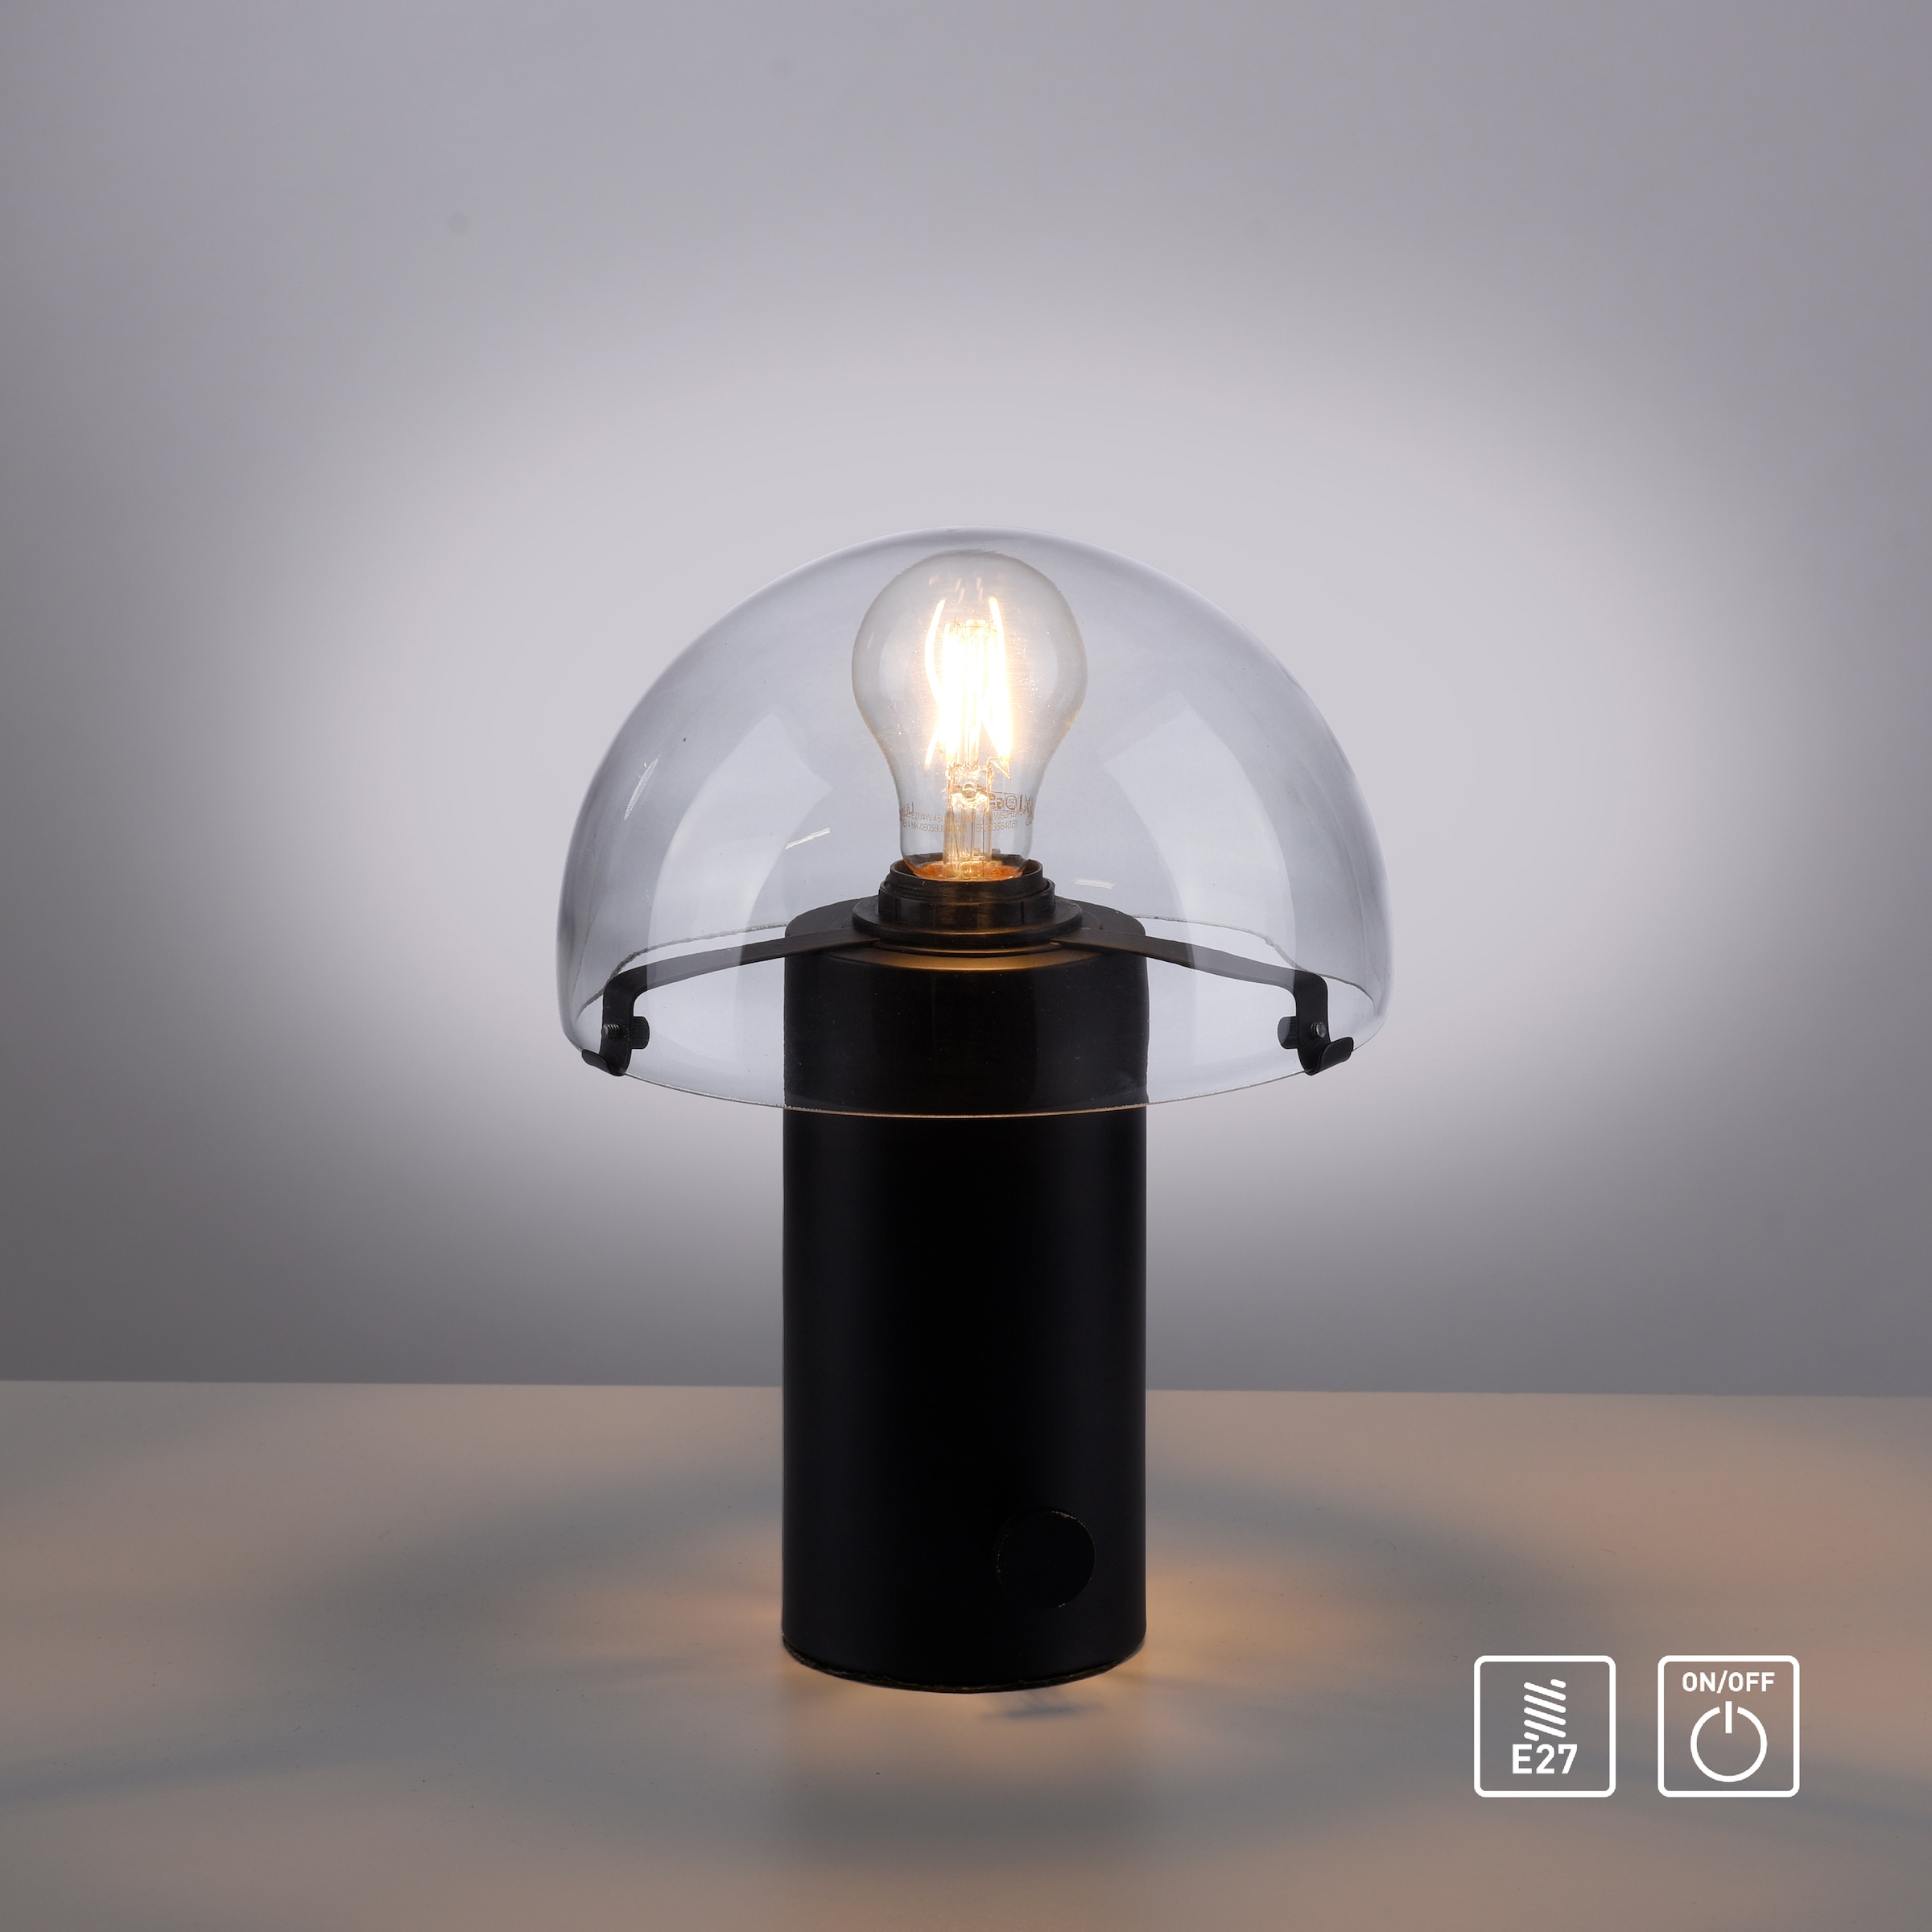 andas Tischleuchte »Skickja«, Drehschalter, E27, skandinavisch online kaufen Tischlampe Pilzlampe